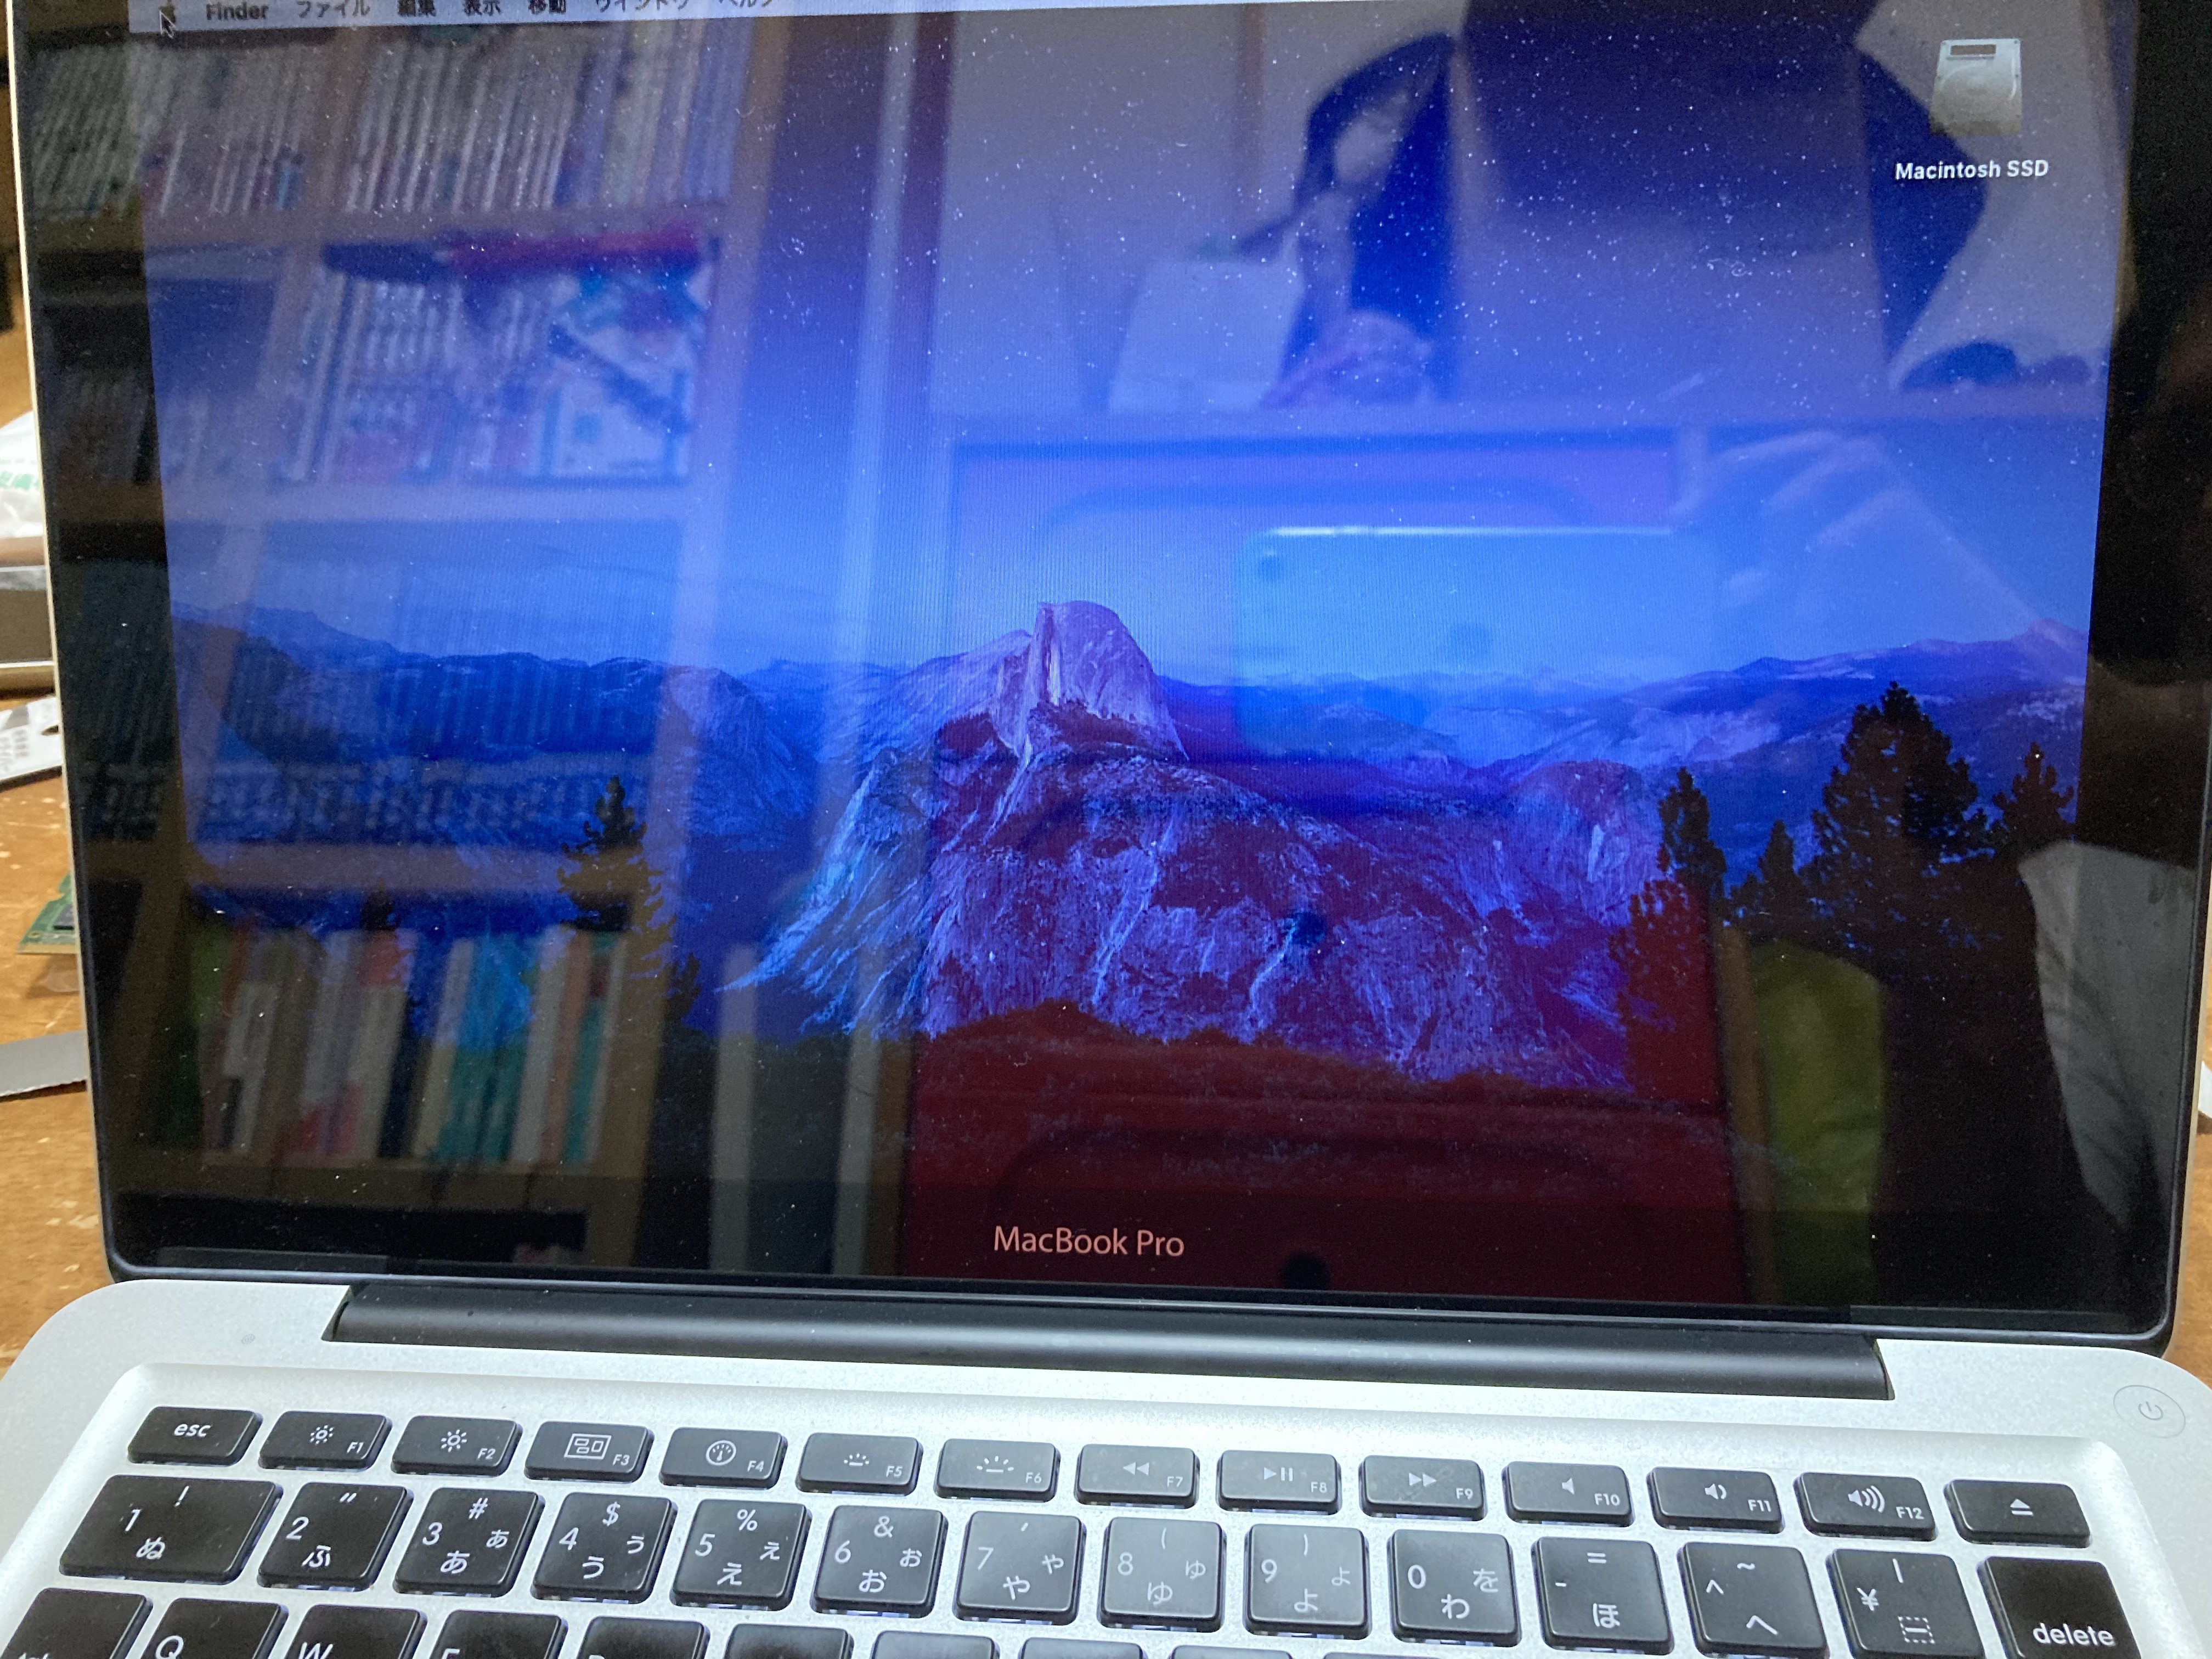 MacBook Pro 2009 メモリ8G